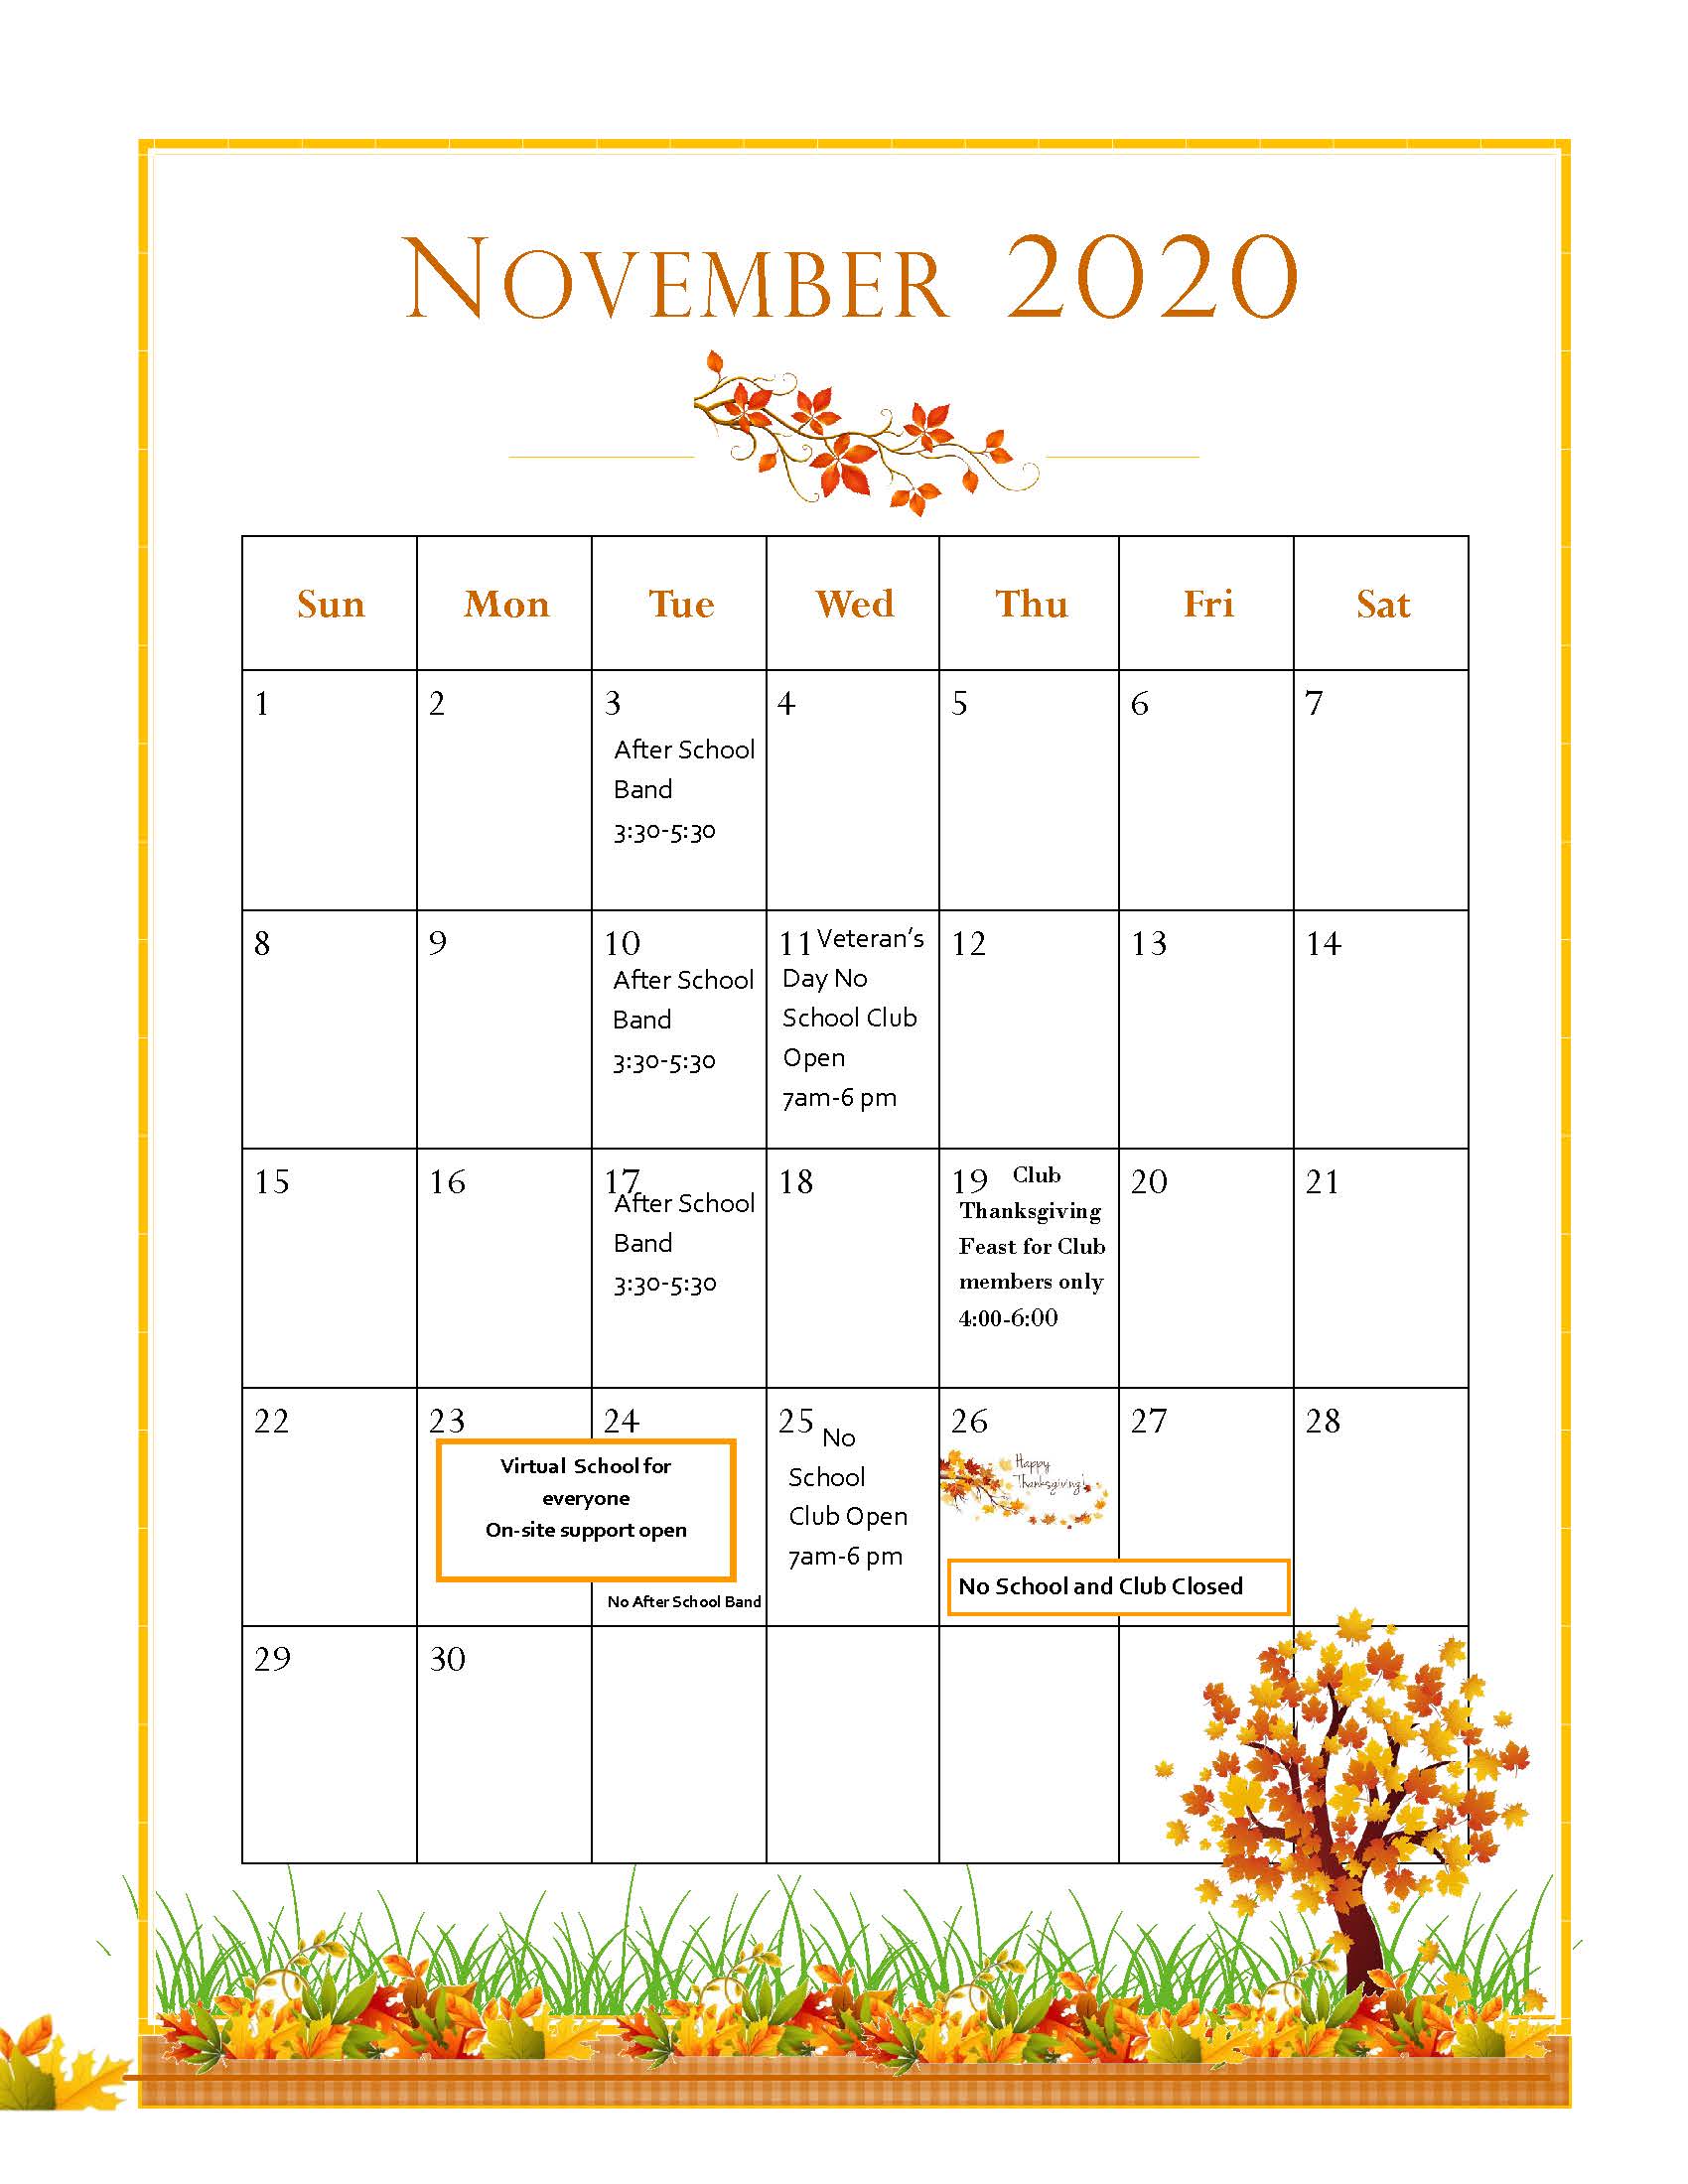 November 2020 web_Page_5